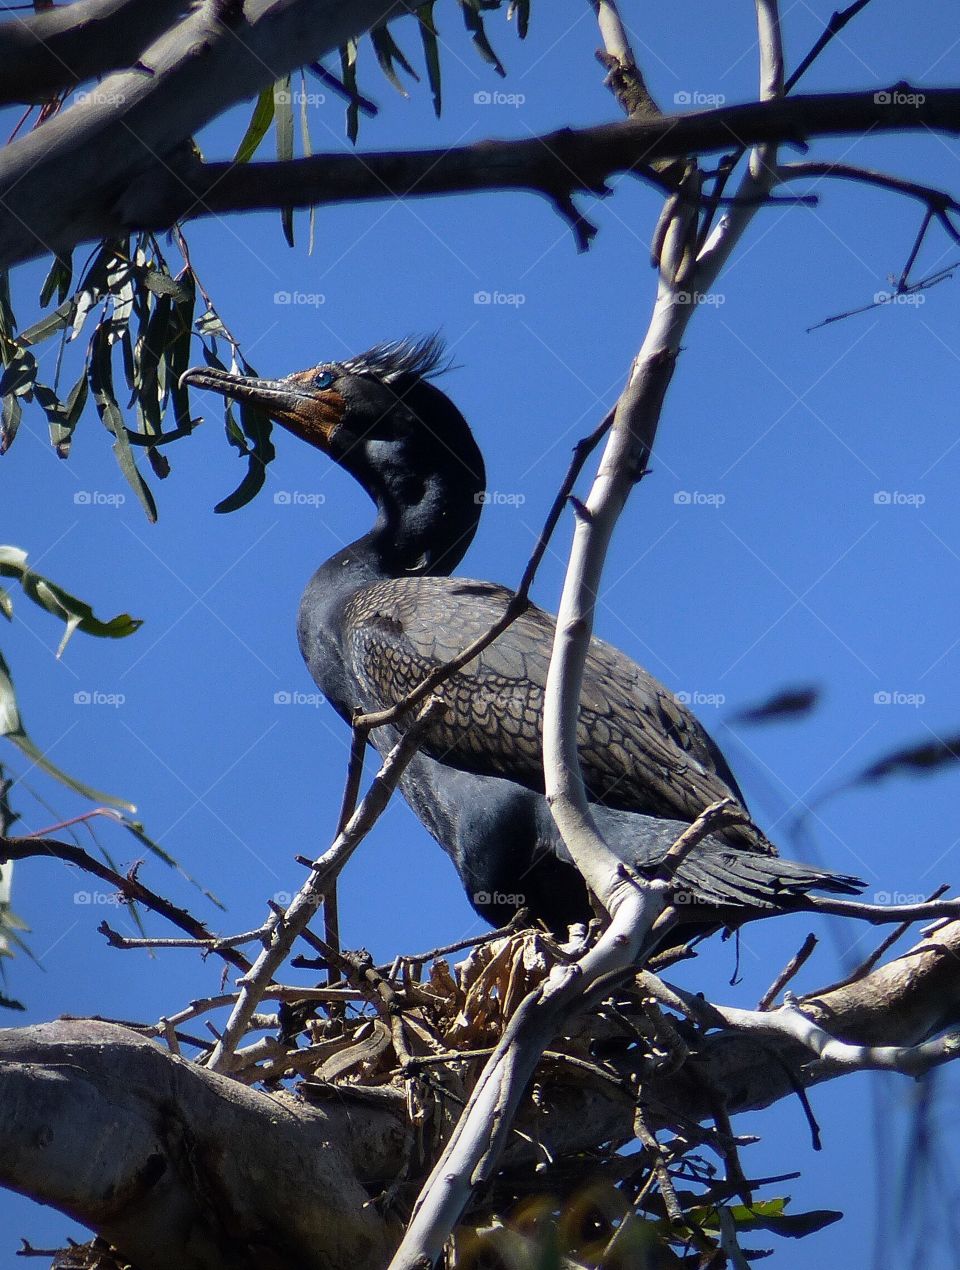 Cormorant by nest